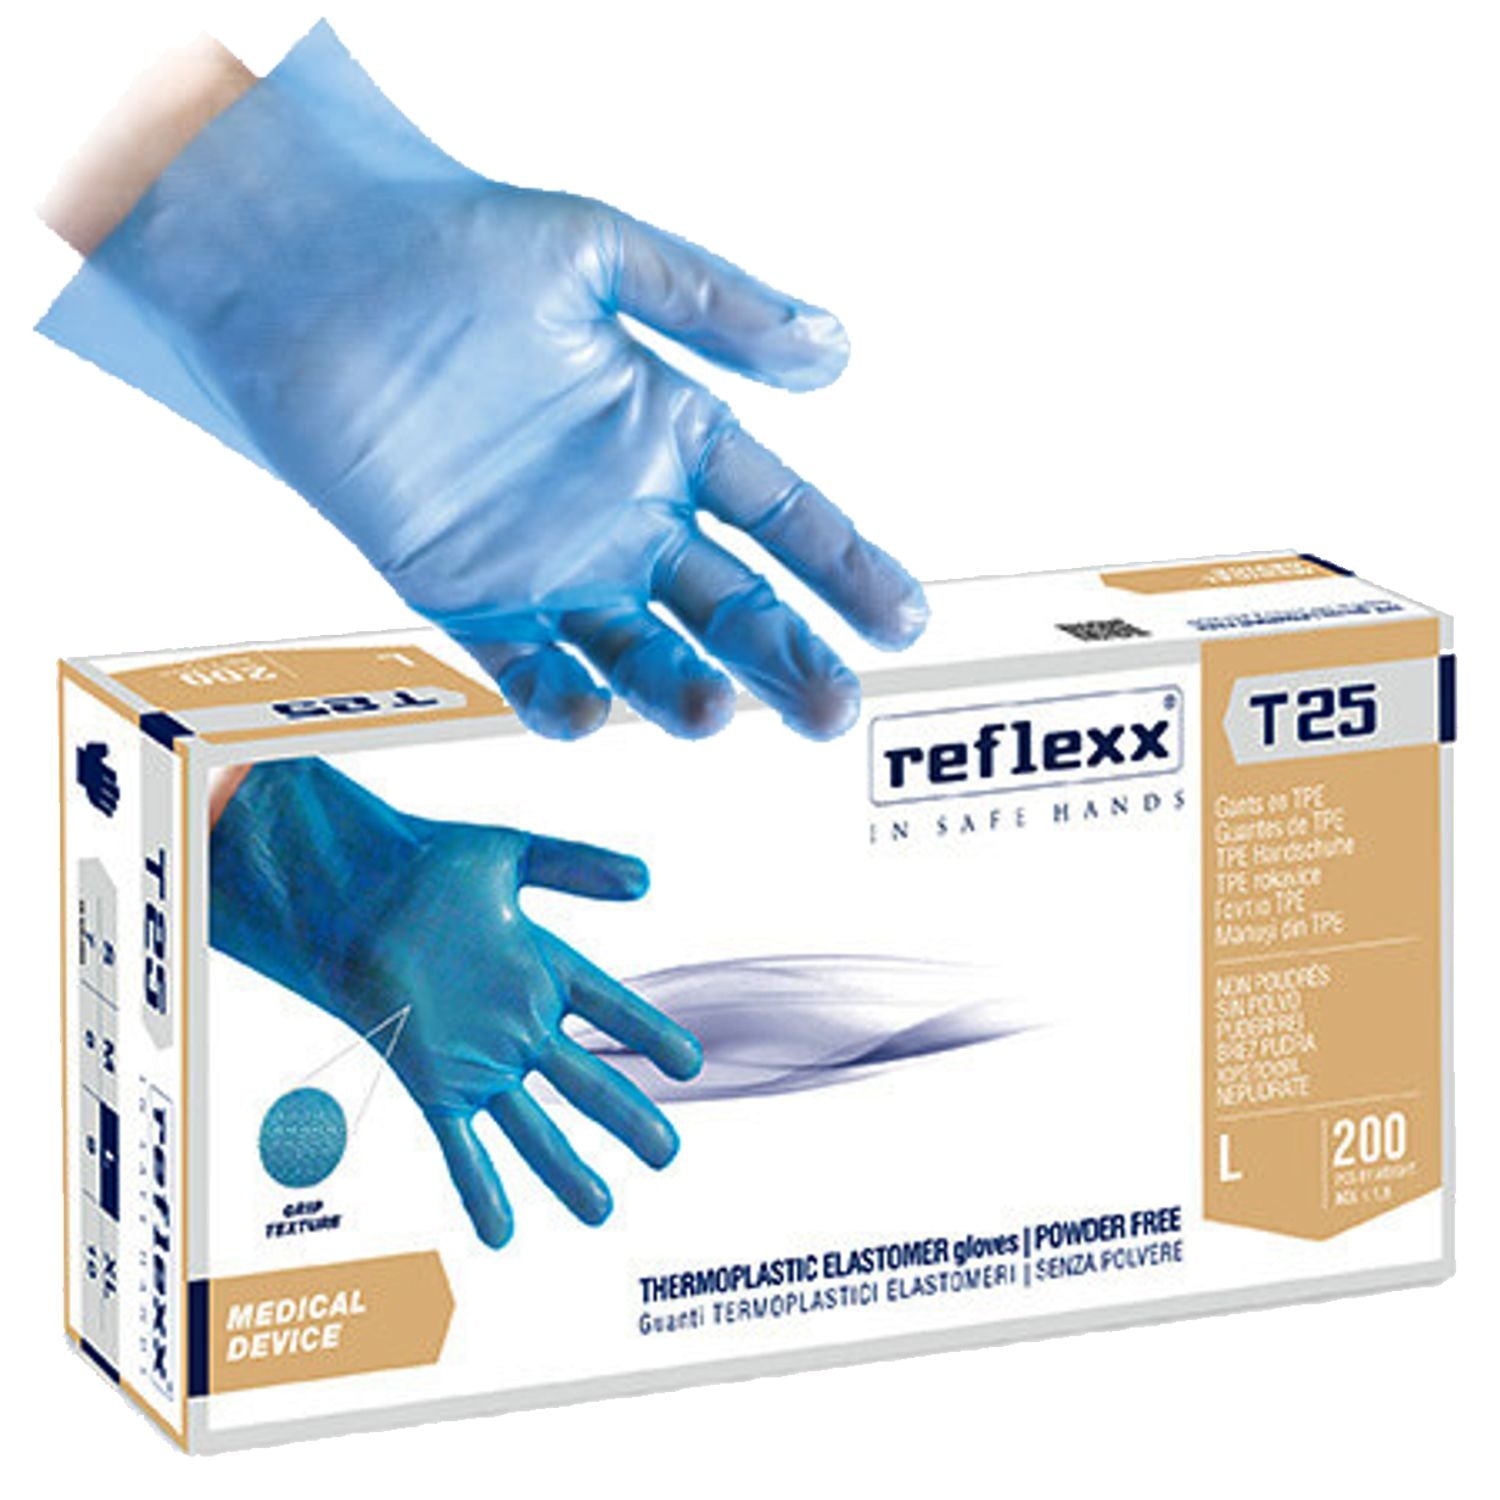 Reflexx T 25 guanti monouso termoplastici Elastomeri hd pe